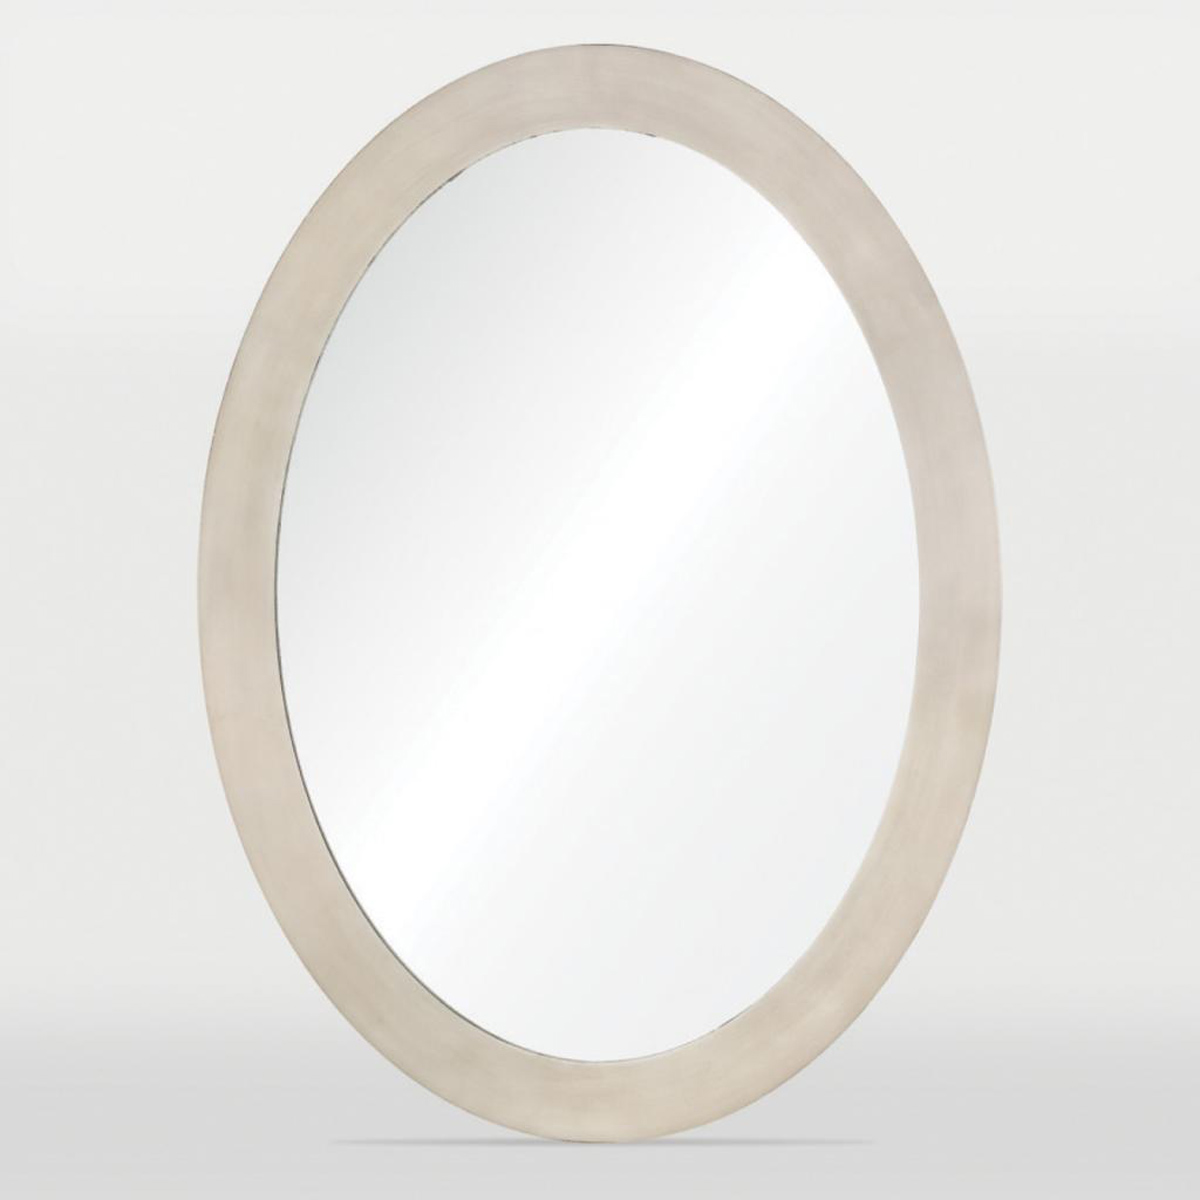 Ren-Wil Bolder Mirror - Brushed Nickel